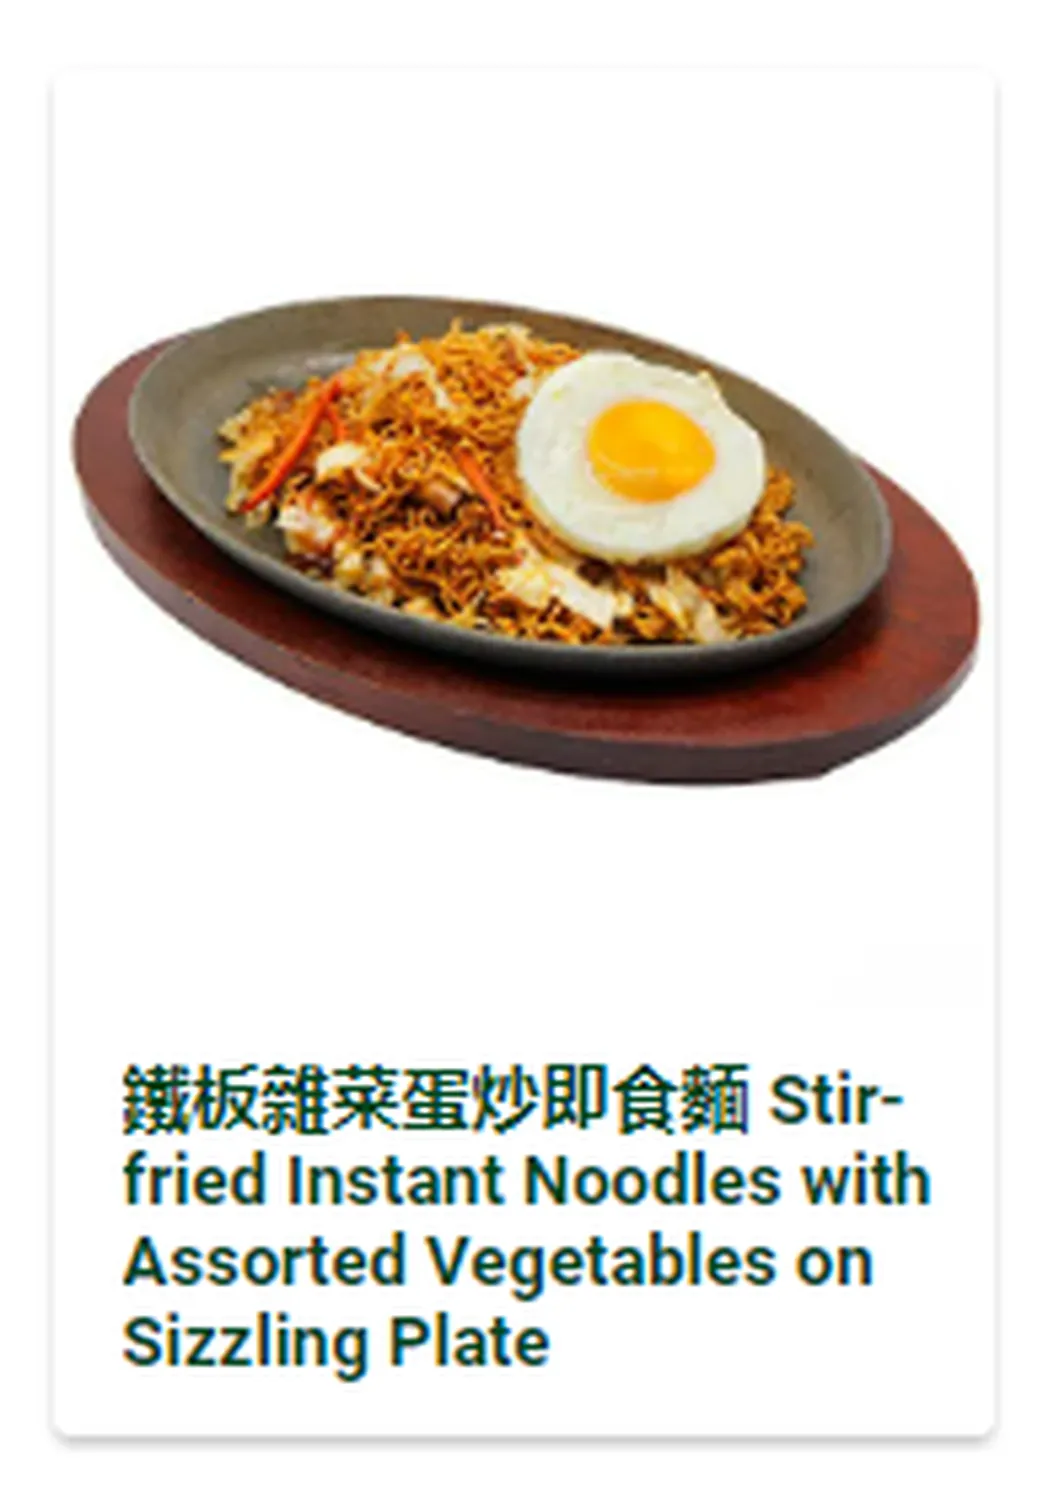 tsui wah menu singapore 鐵板炒麵系列 Sizzling Plate Noodles 1